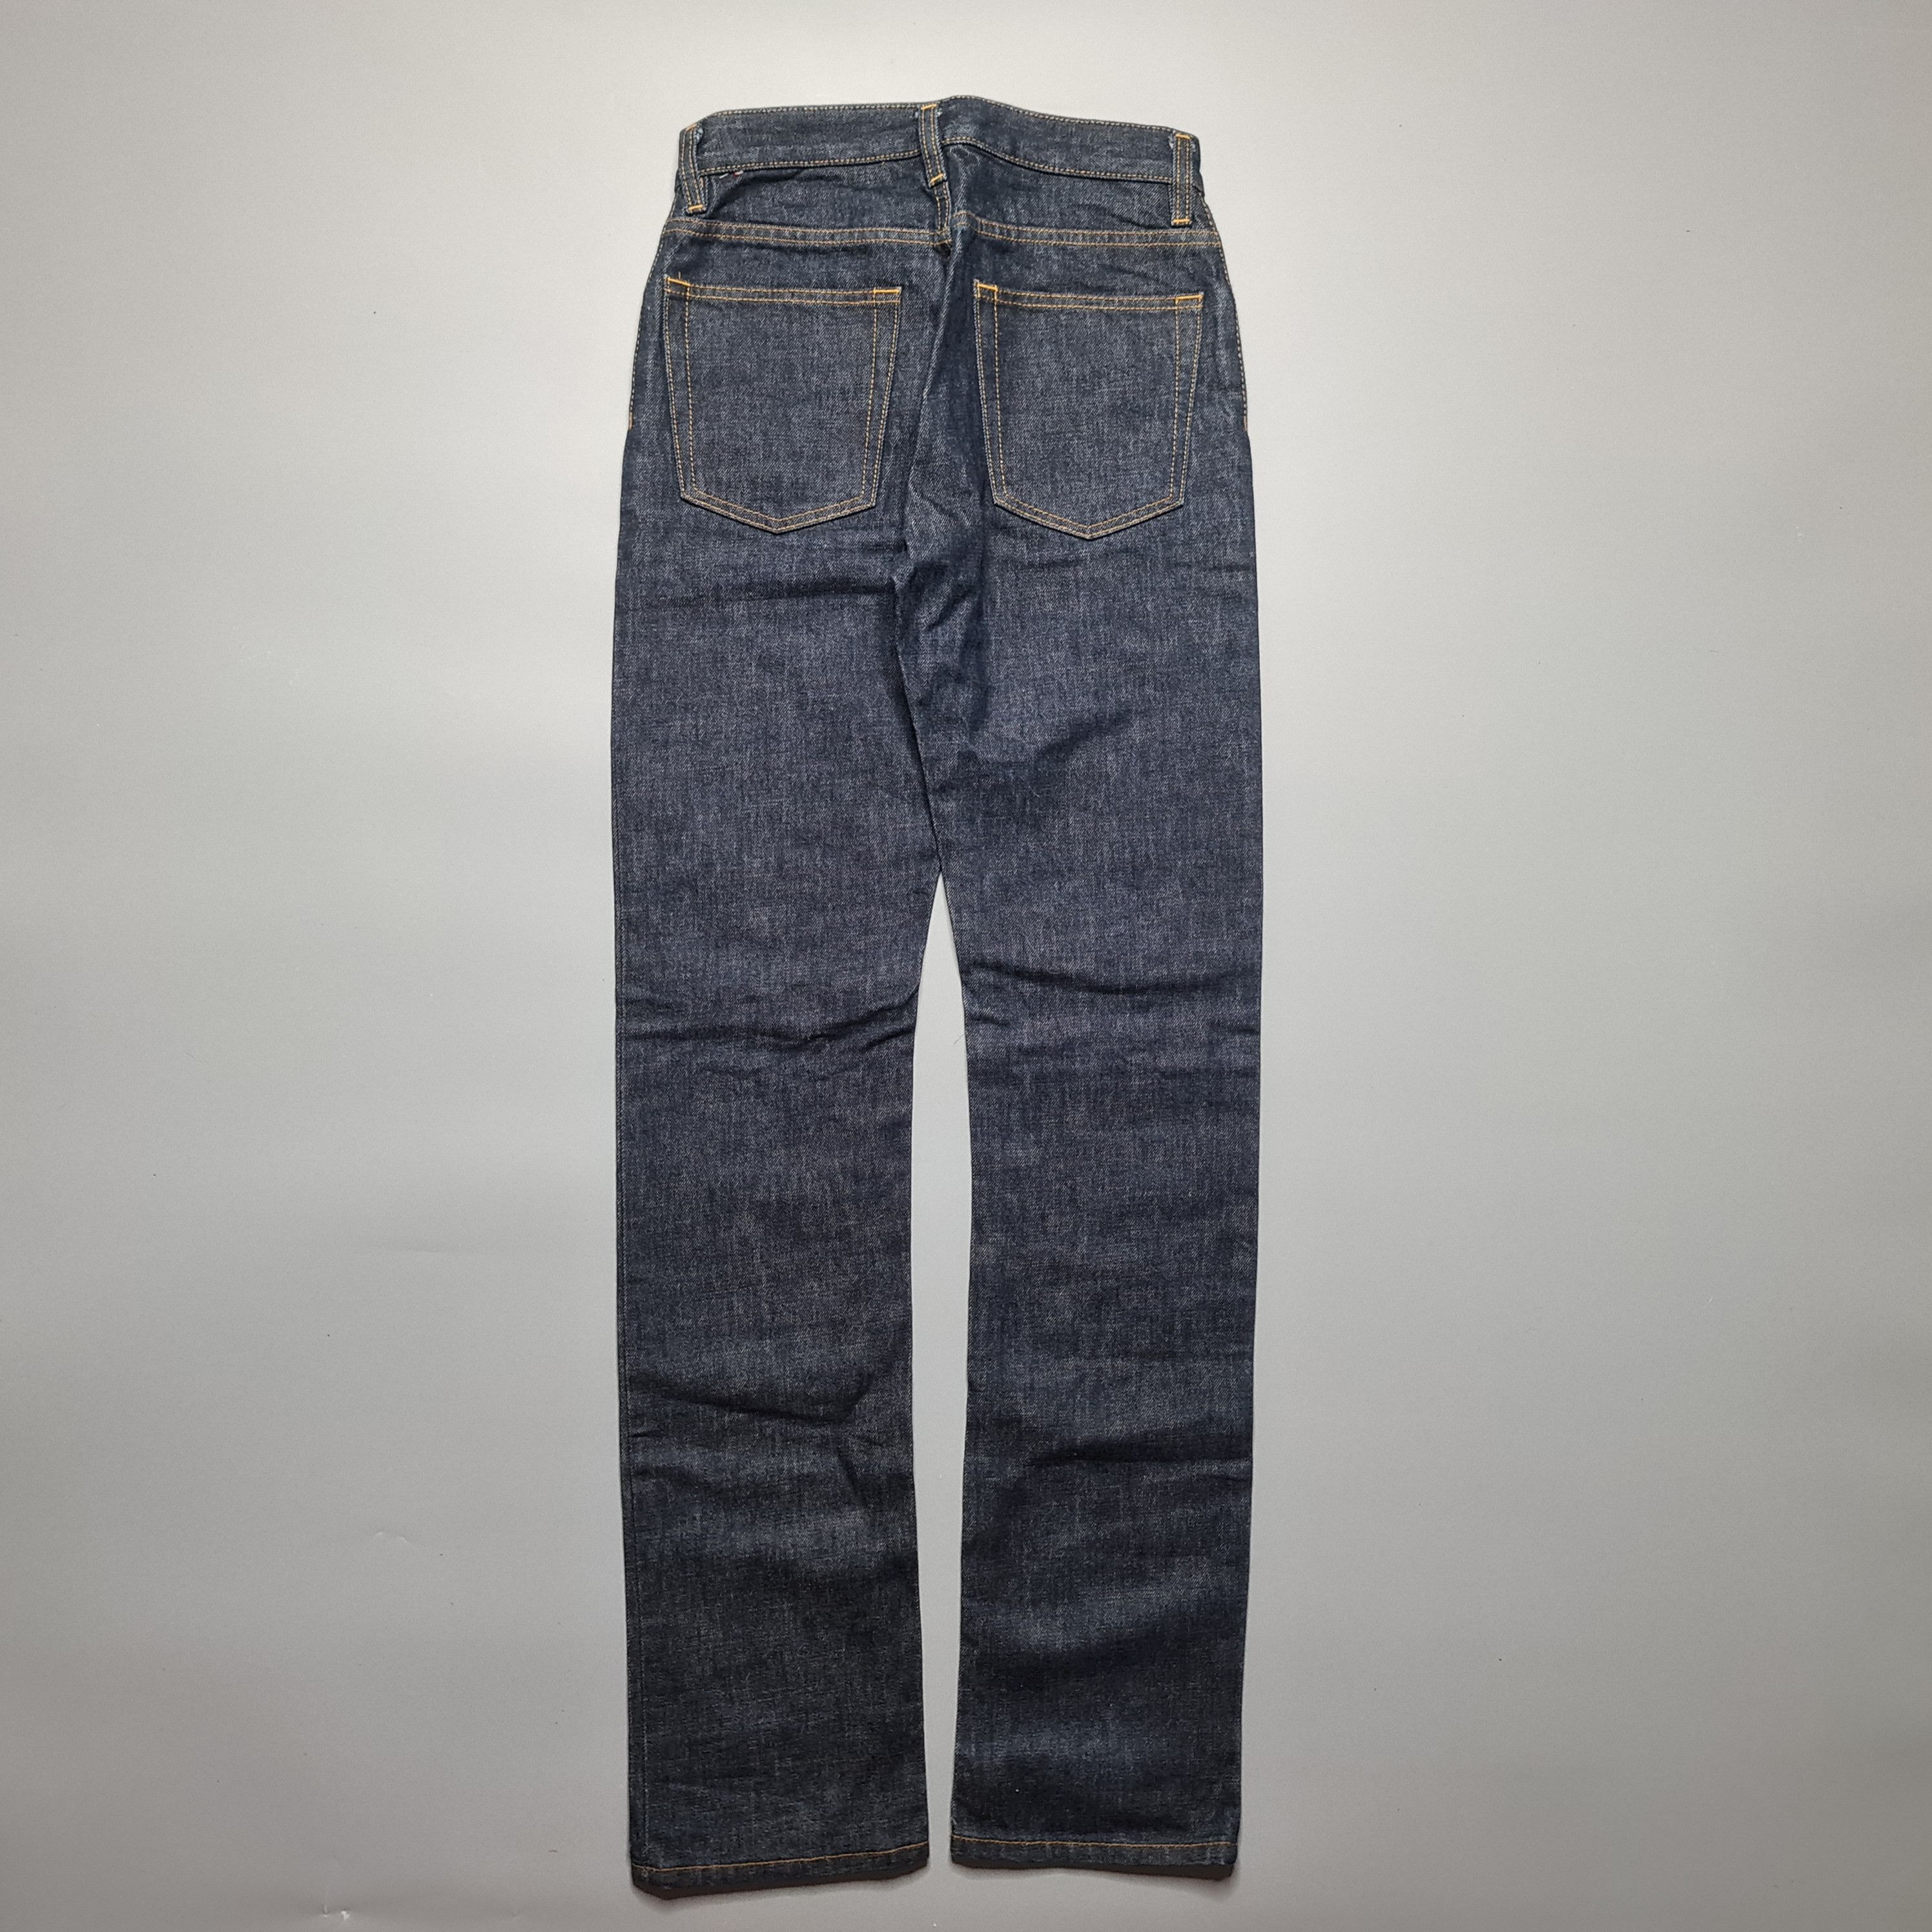 Helmut Lang - SS98 Classic 5-Pocket Jeans - 5